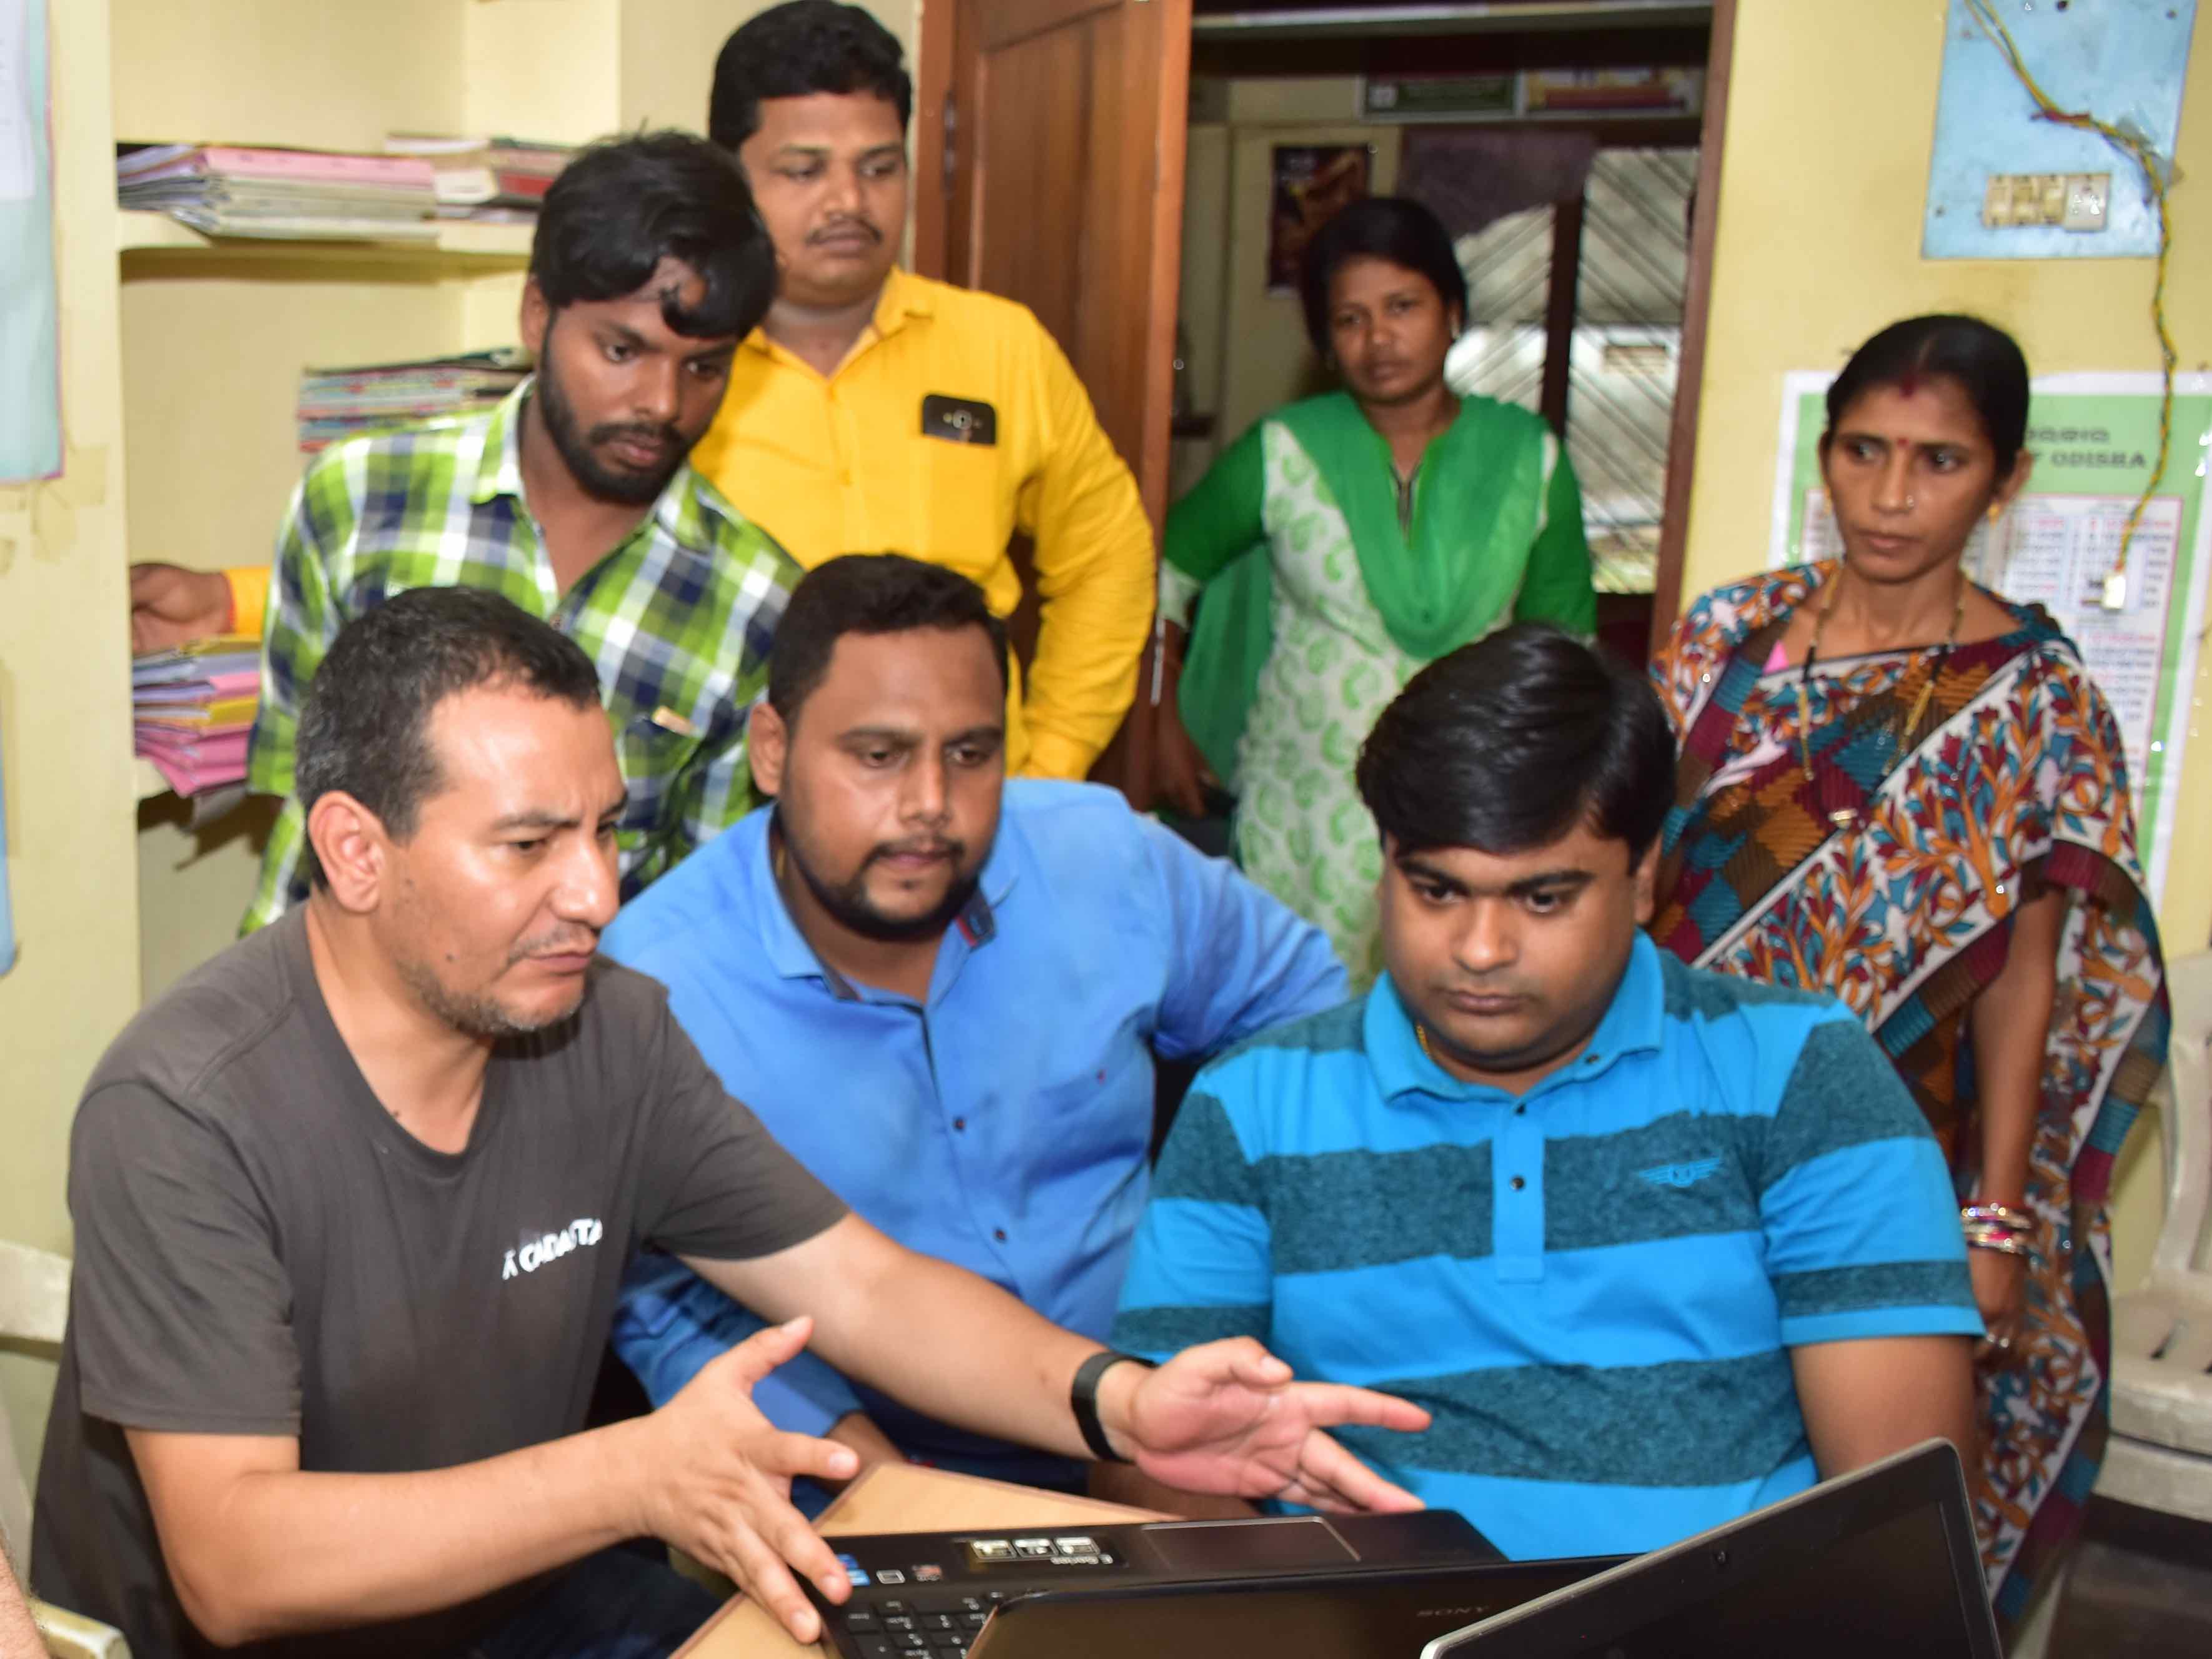 community gathered around a computer